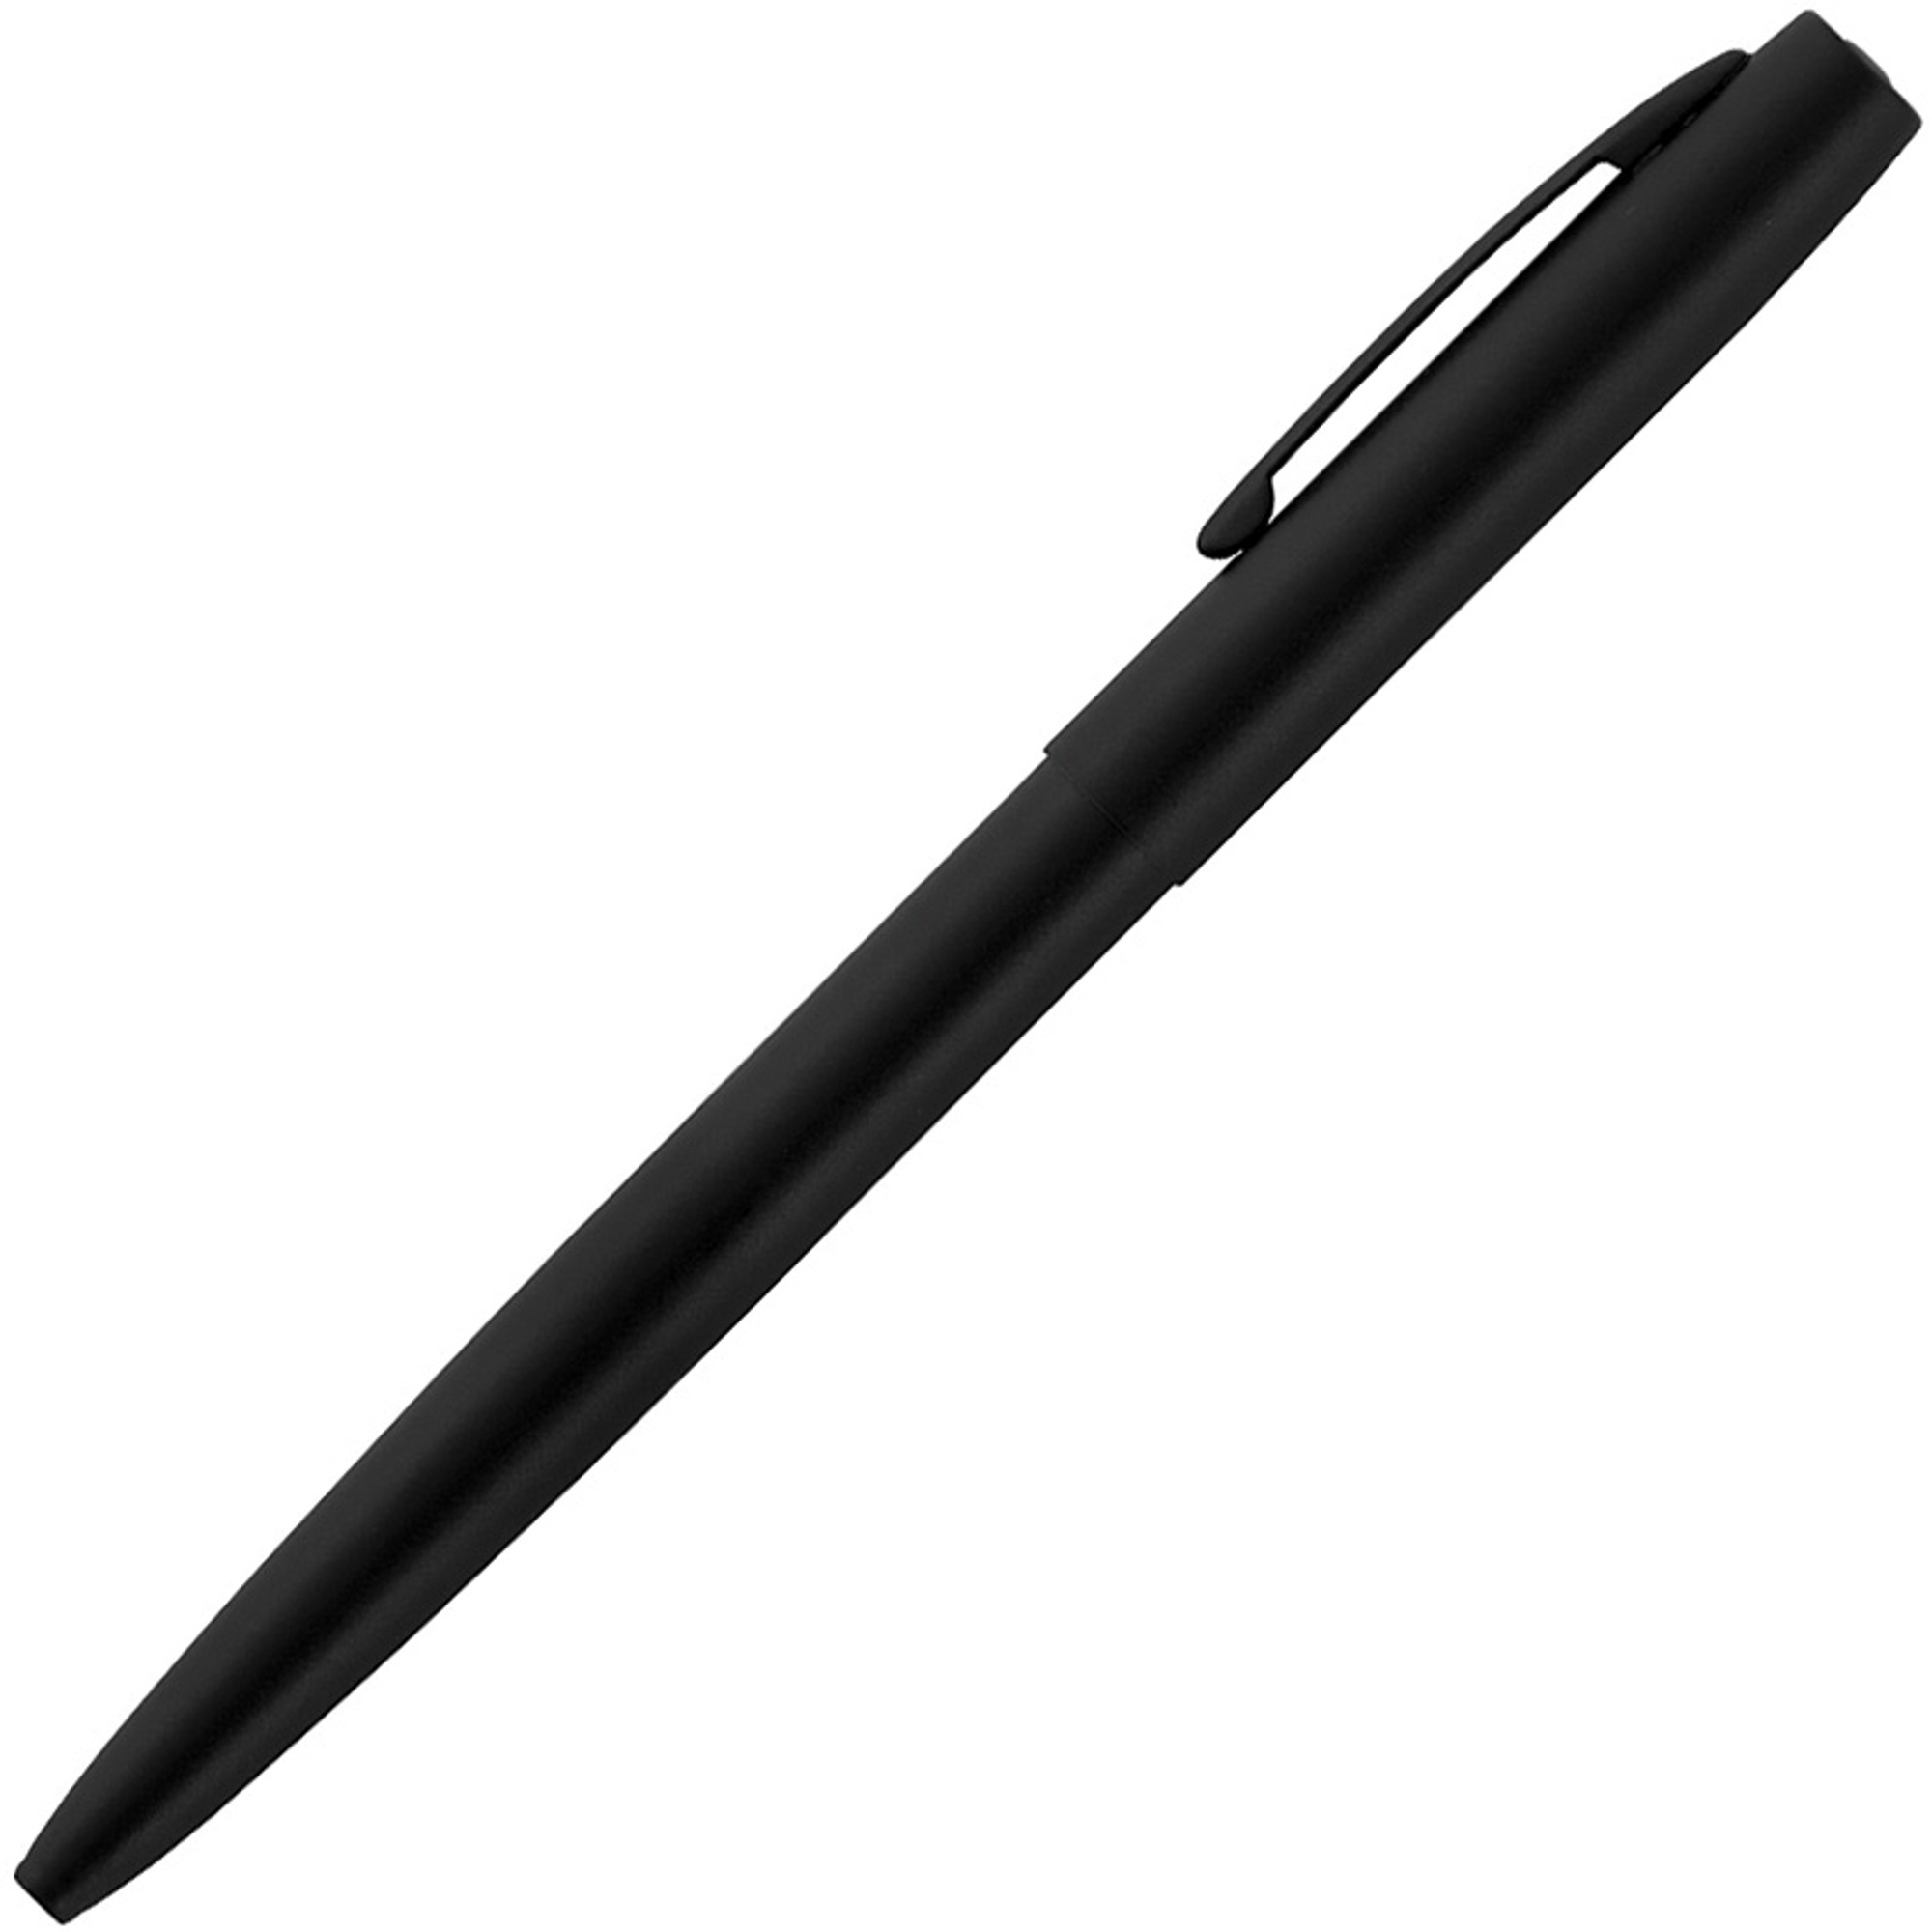 Military Cap-O-Matic Pen